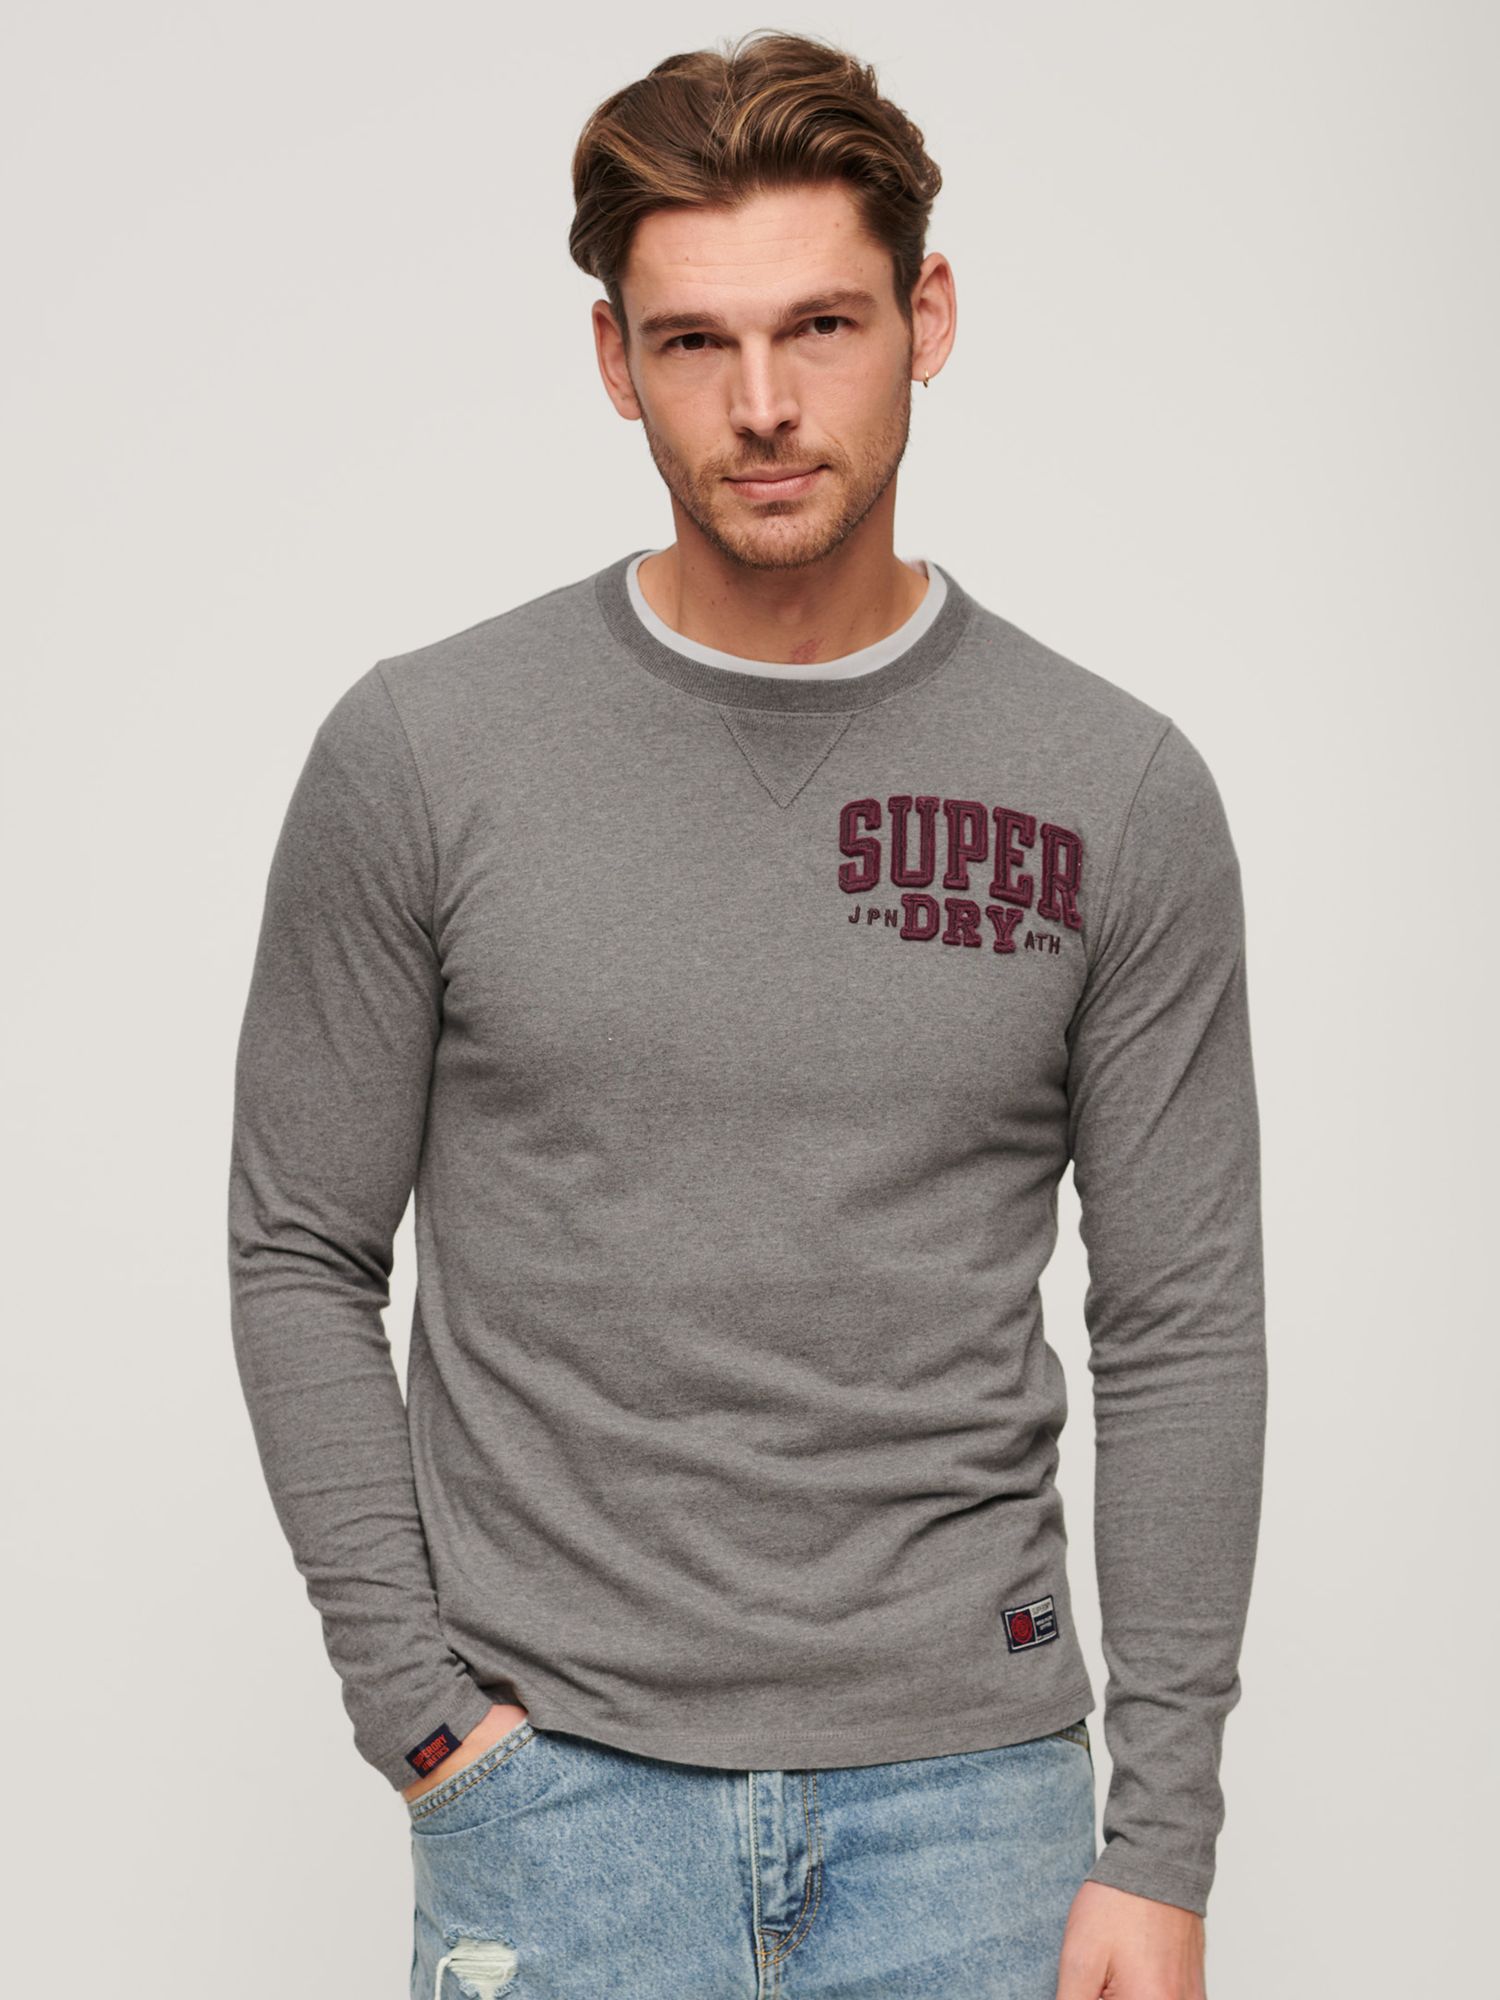 Superdry Vintage Athletic Long Sleeve T-Shirt, Grey at John Lewis & Partners